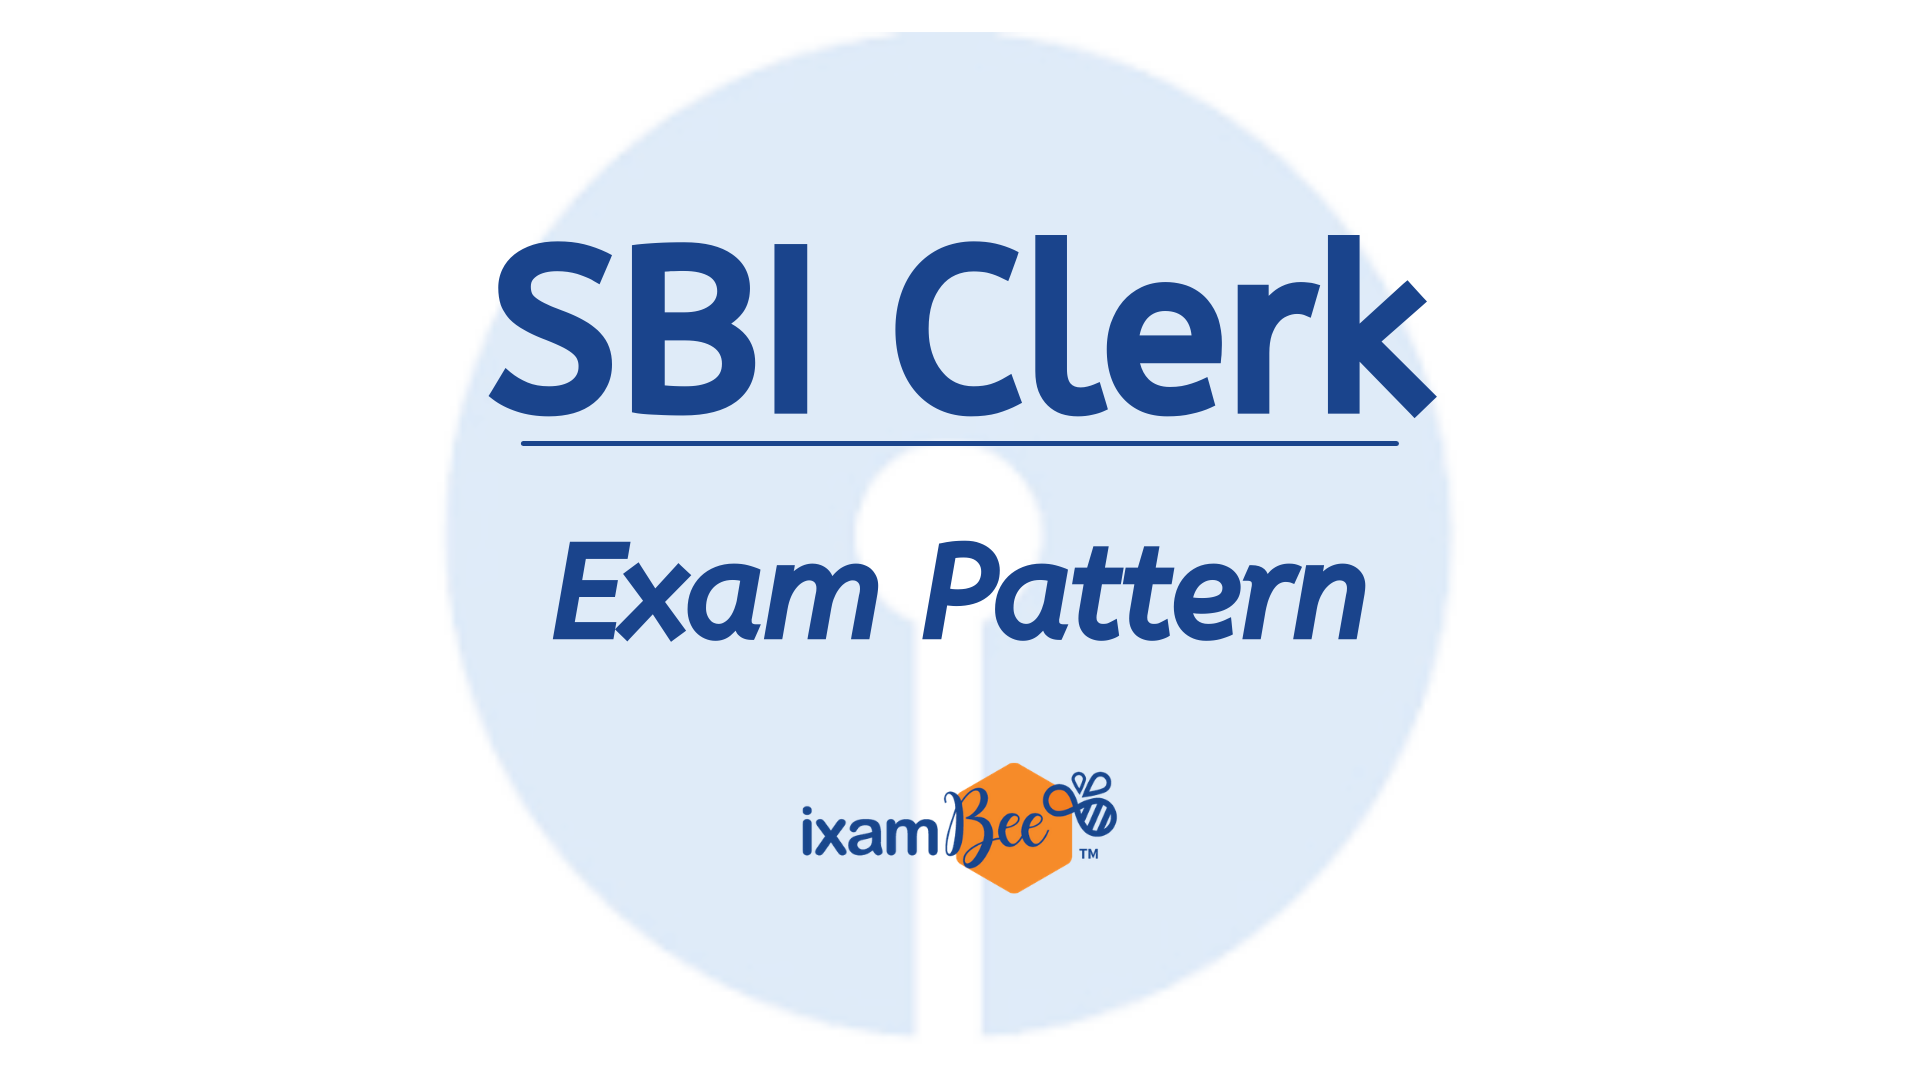 SBI Clerk Exam Pattern 2021